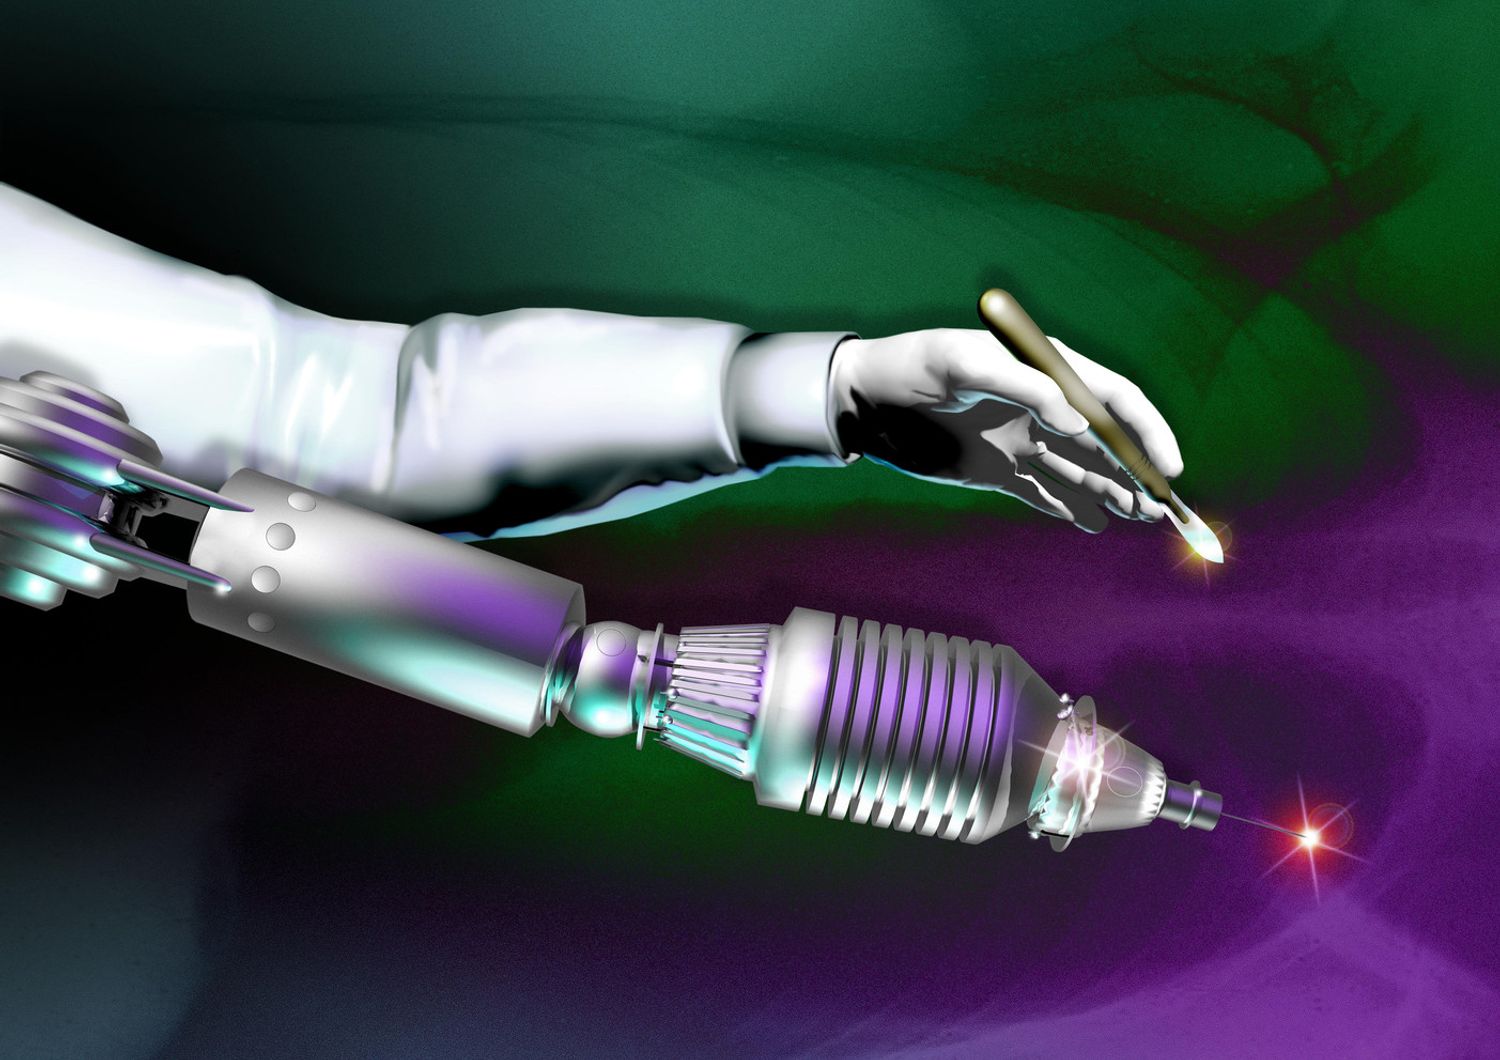 &nbsp;Robot chirurgo medicina futuro scienza&nbsp;